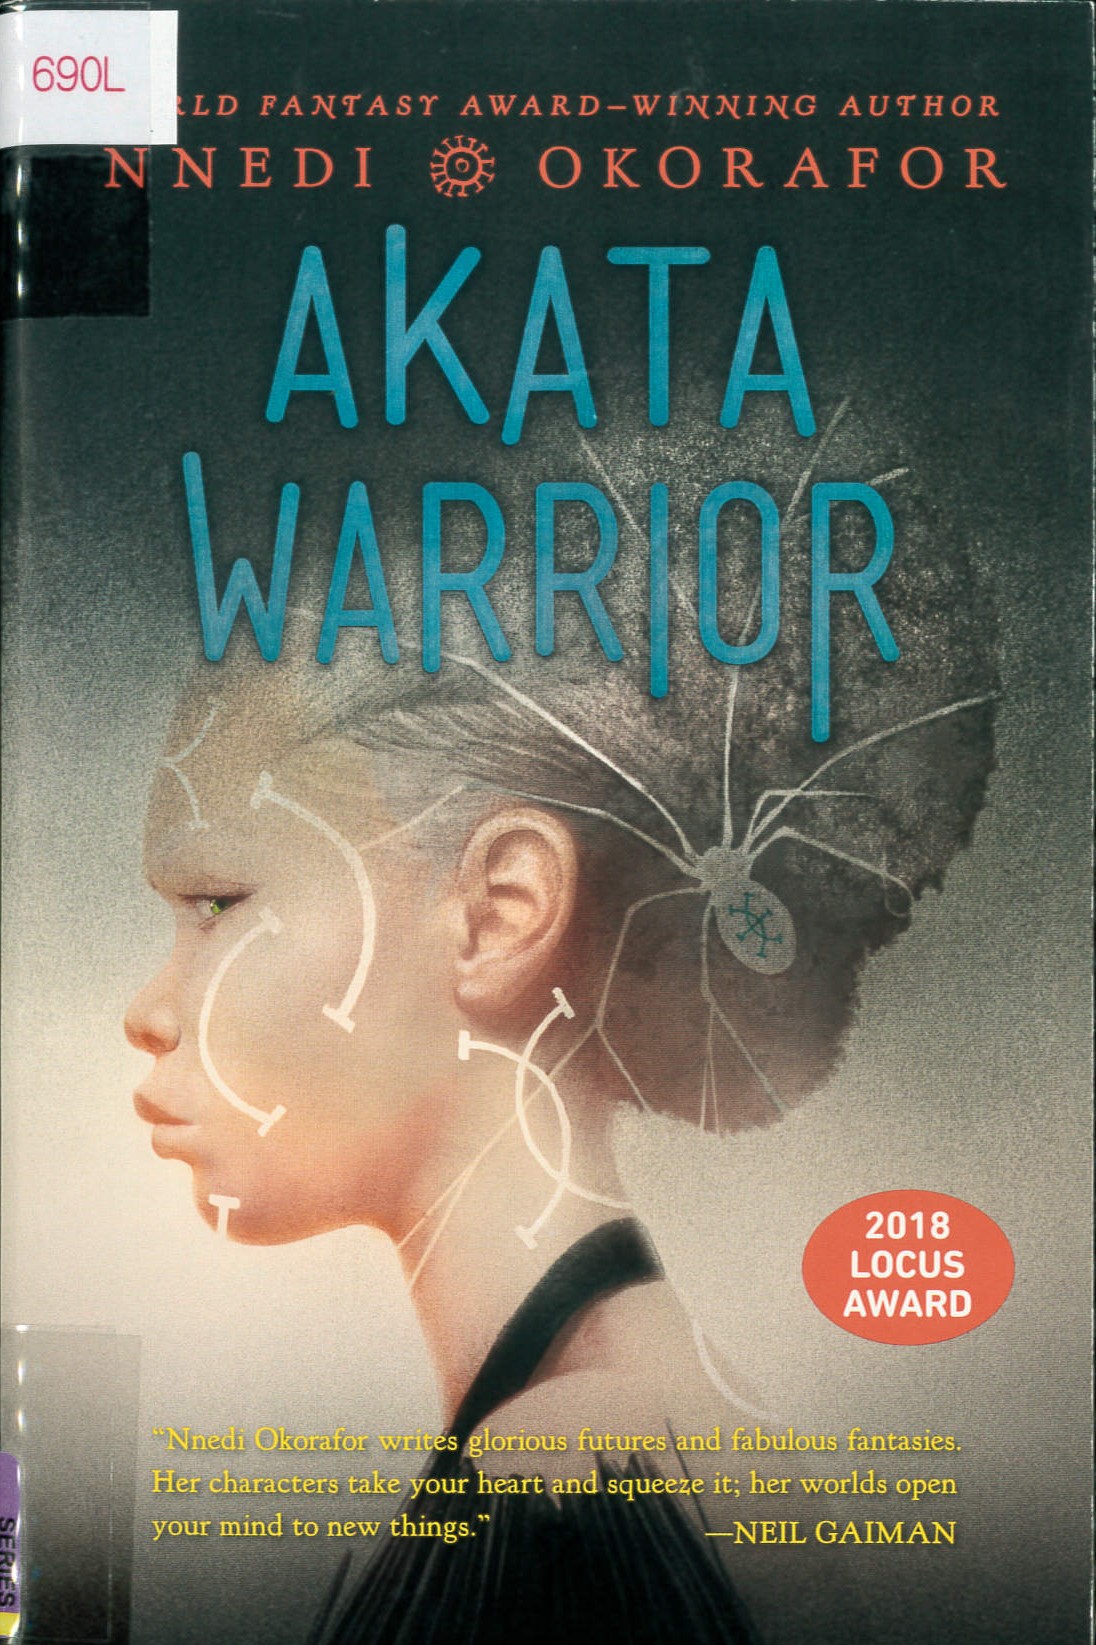 Akata warrior /